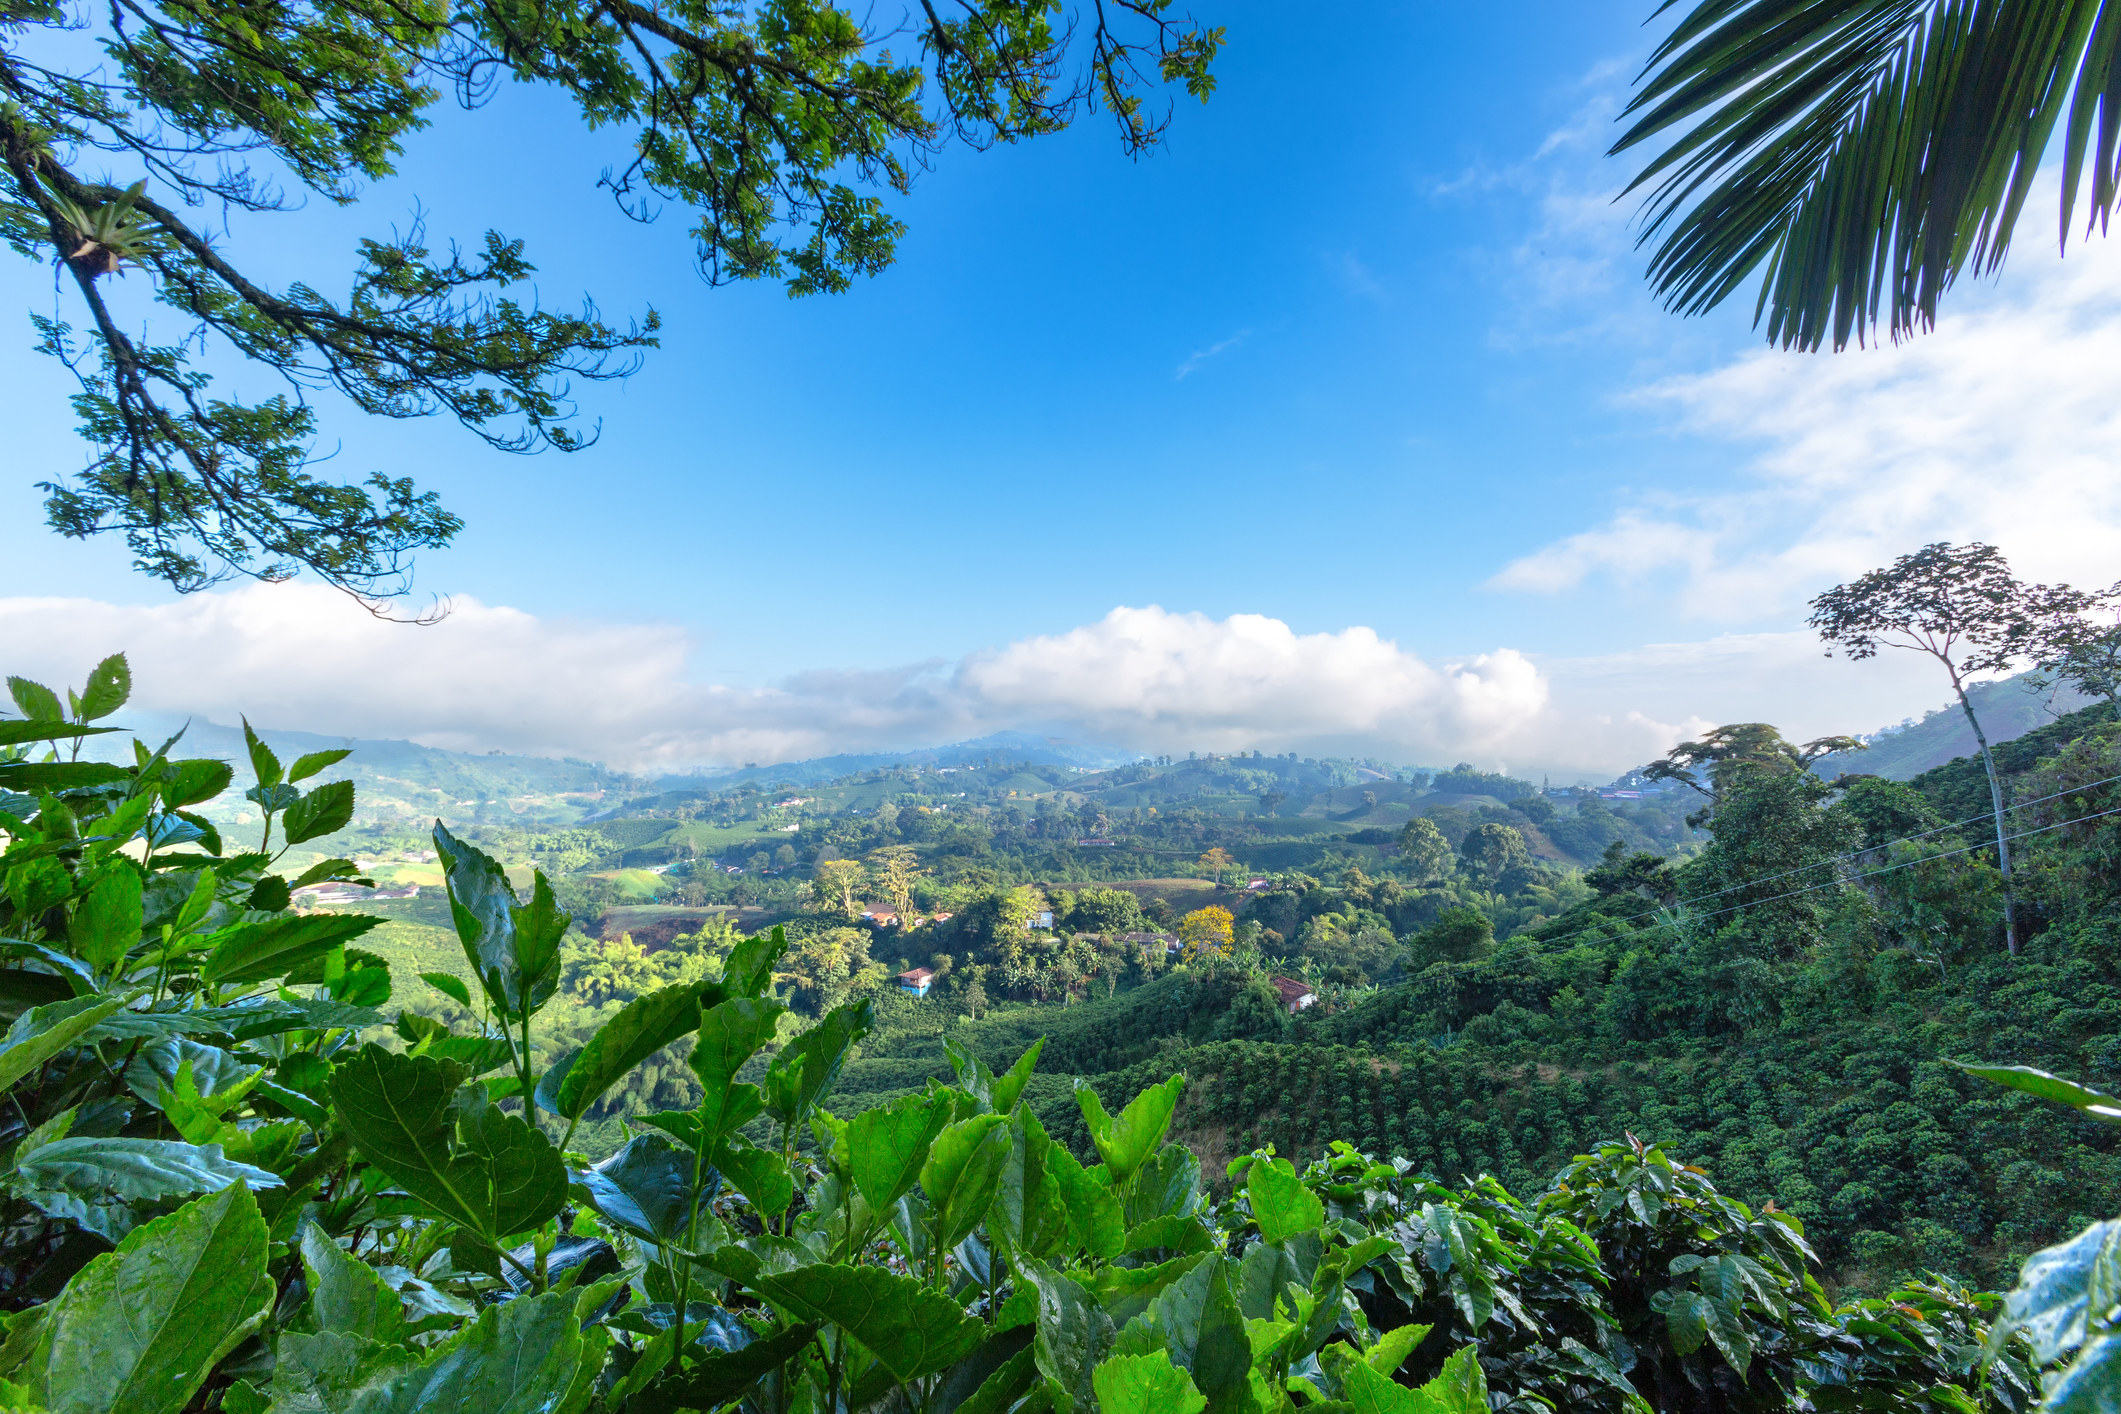 A Colombian coffee plantation.